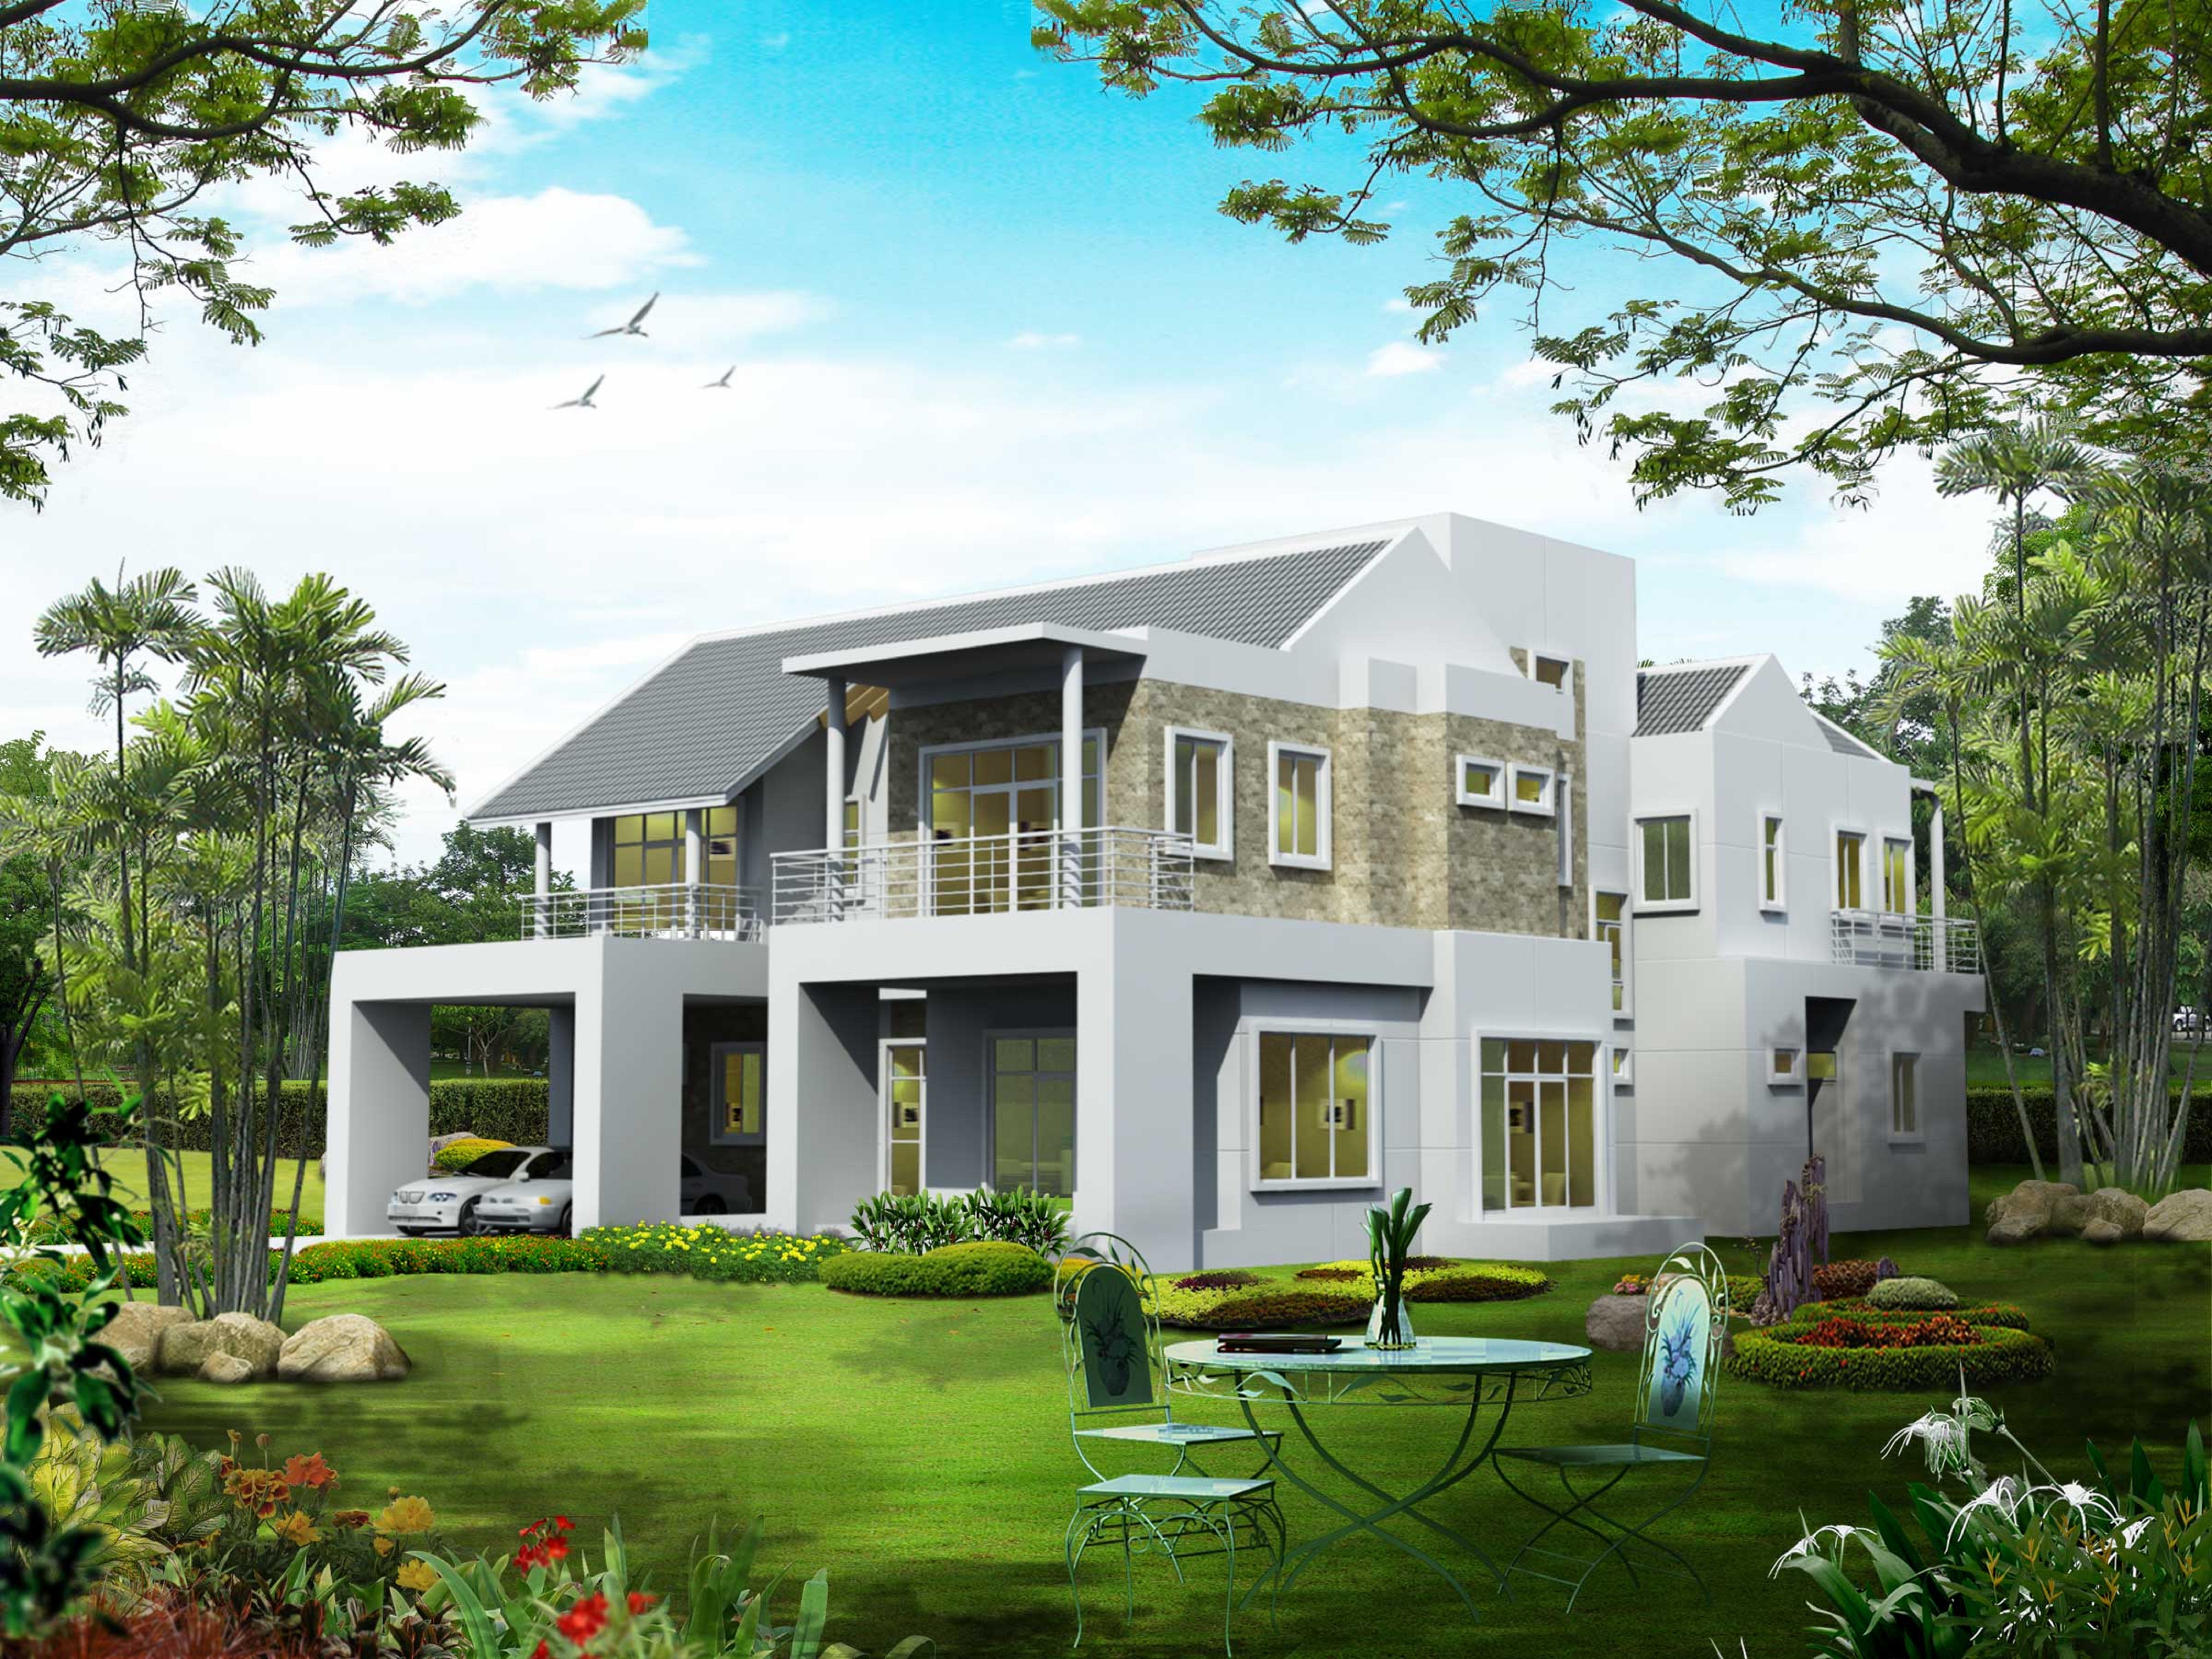 Villas in HyderabadReal EstateOffice-Commercial For SaleAll IndiaAirport